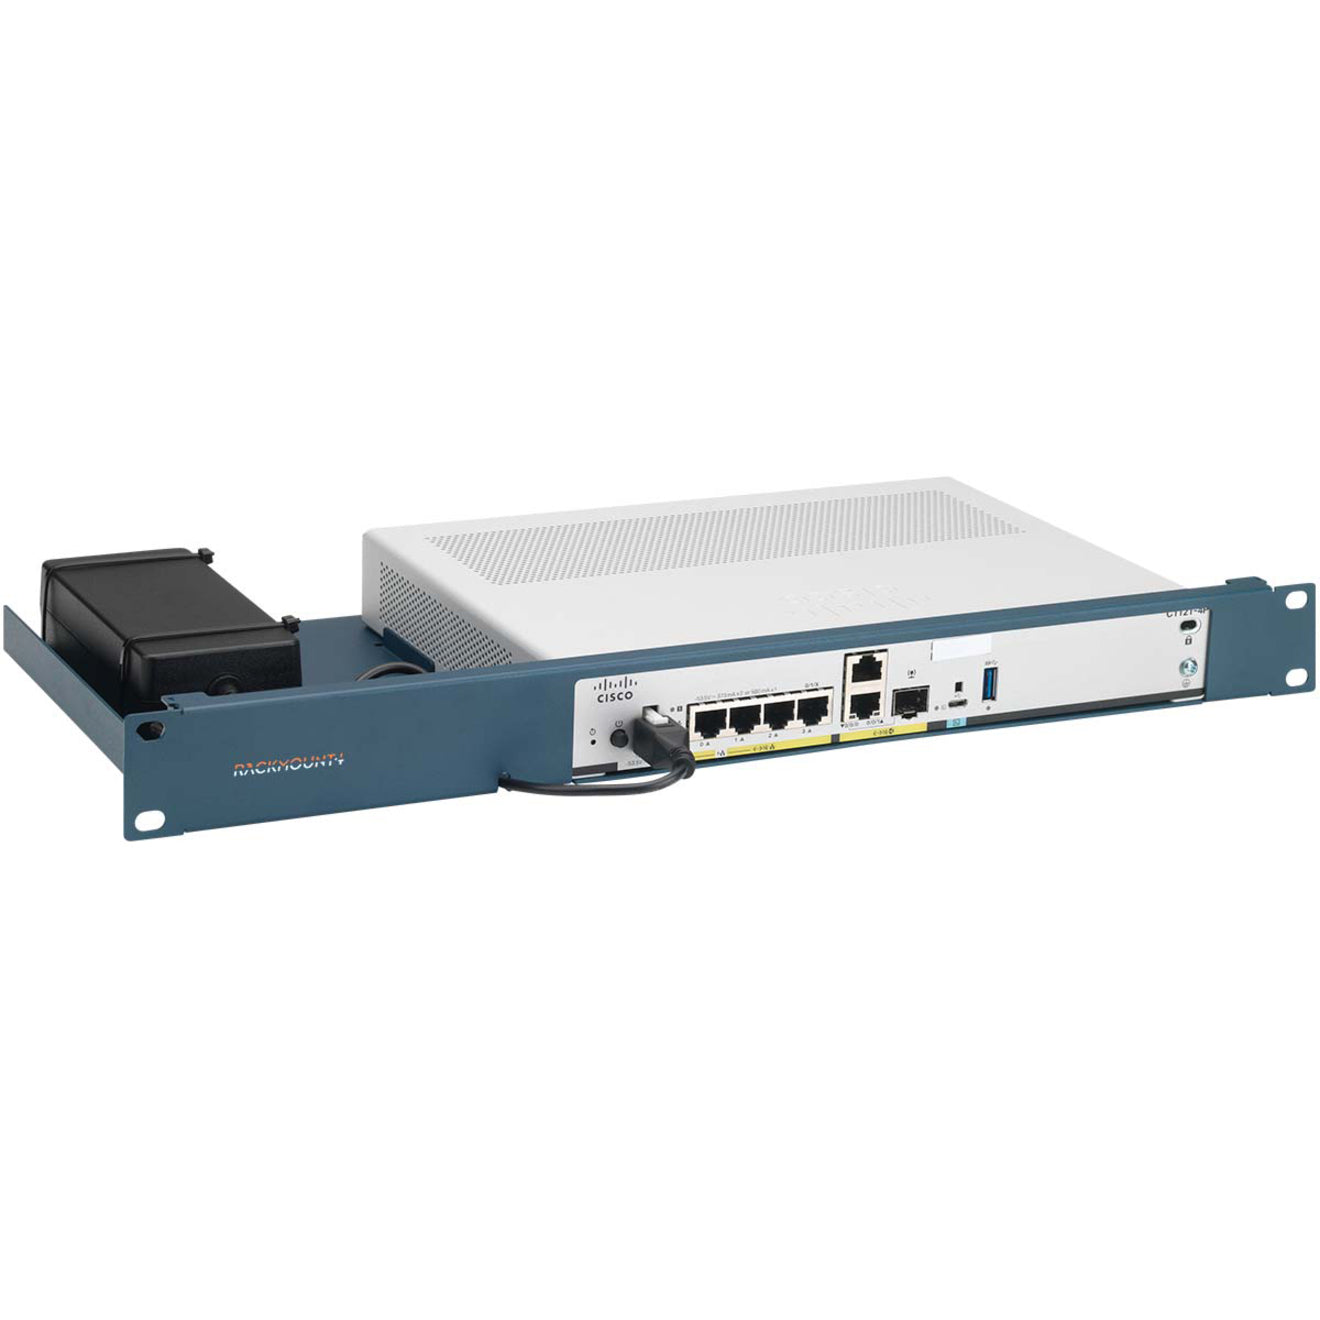 RACKMOUNT.IT RM-CI-T10 Cisrack Rack Shelf for ISR 1000 Series, Patch Panel, LAN Switch